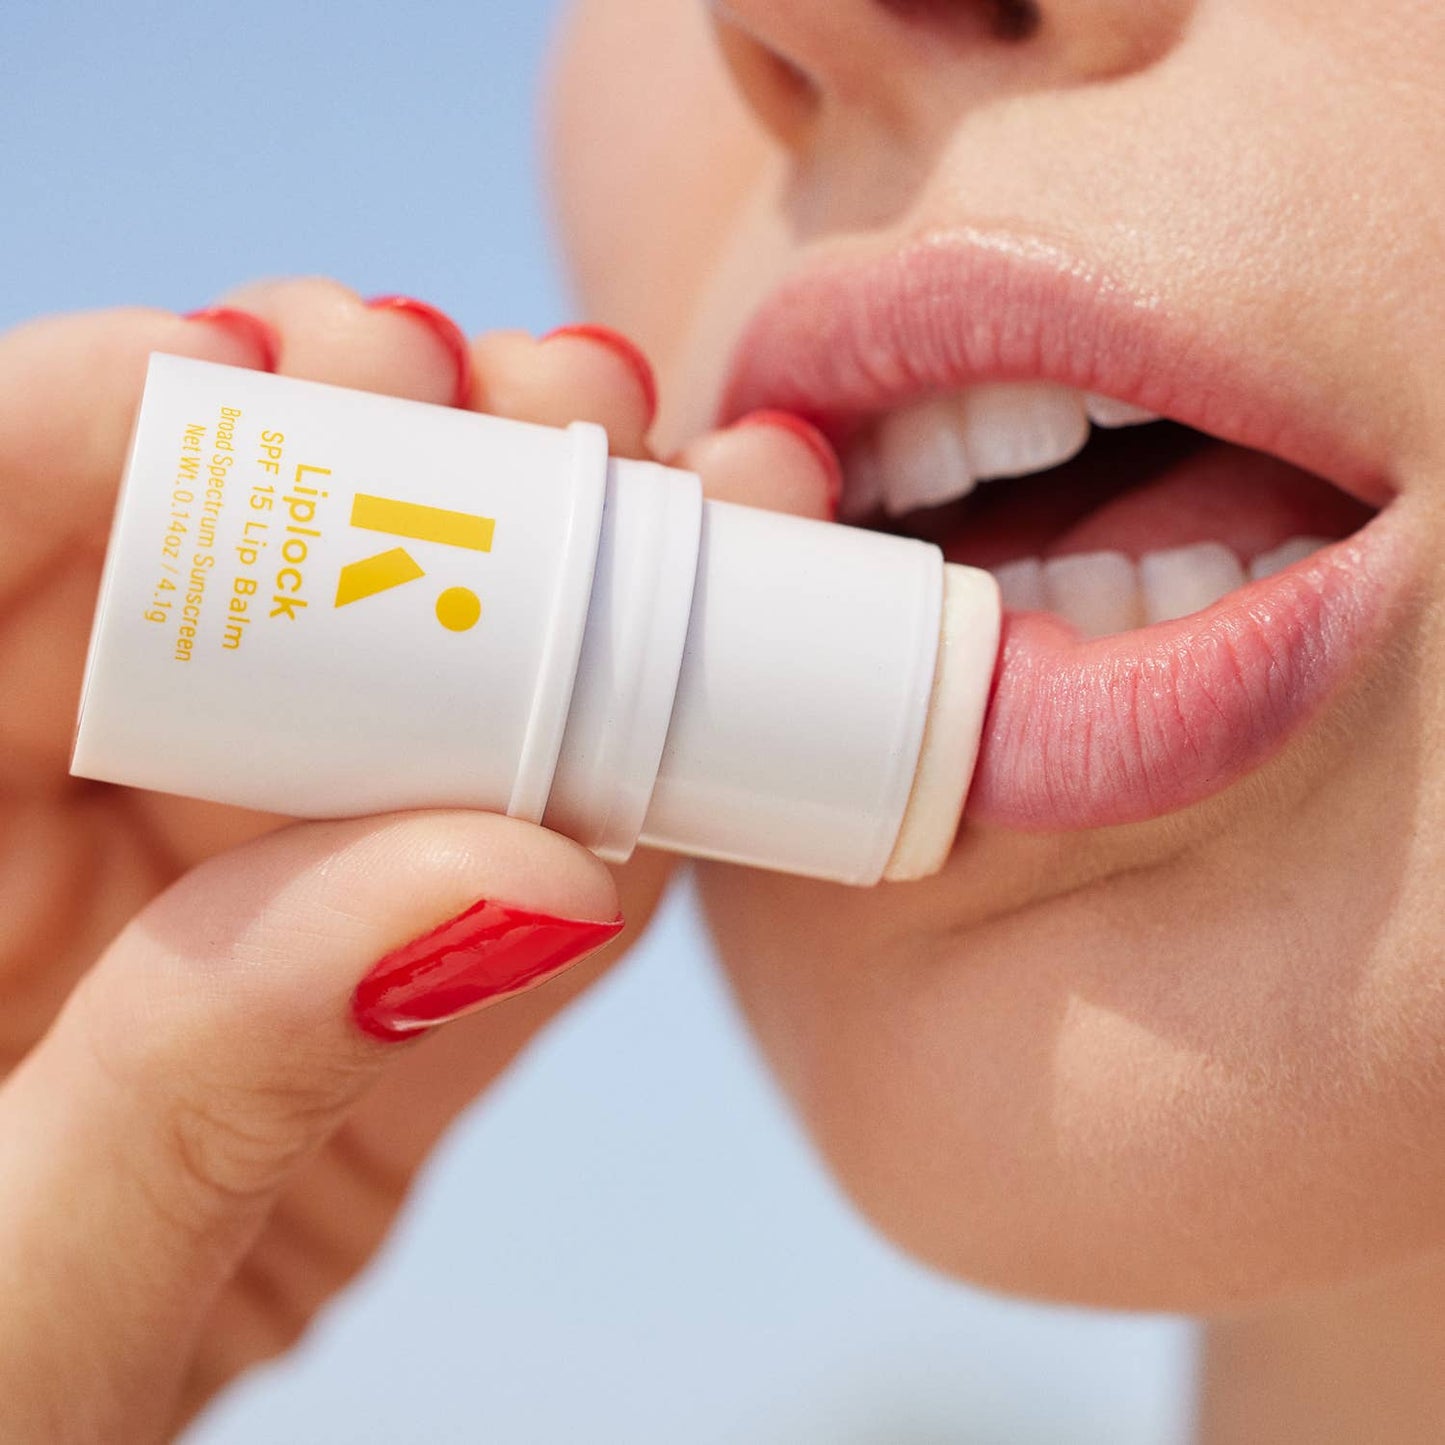 Liplock SPF 15 Sunscreen Lip Balm